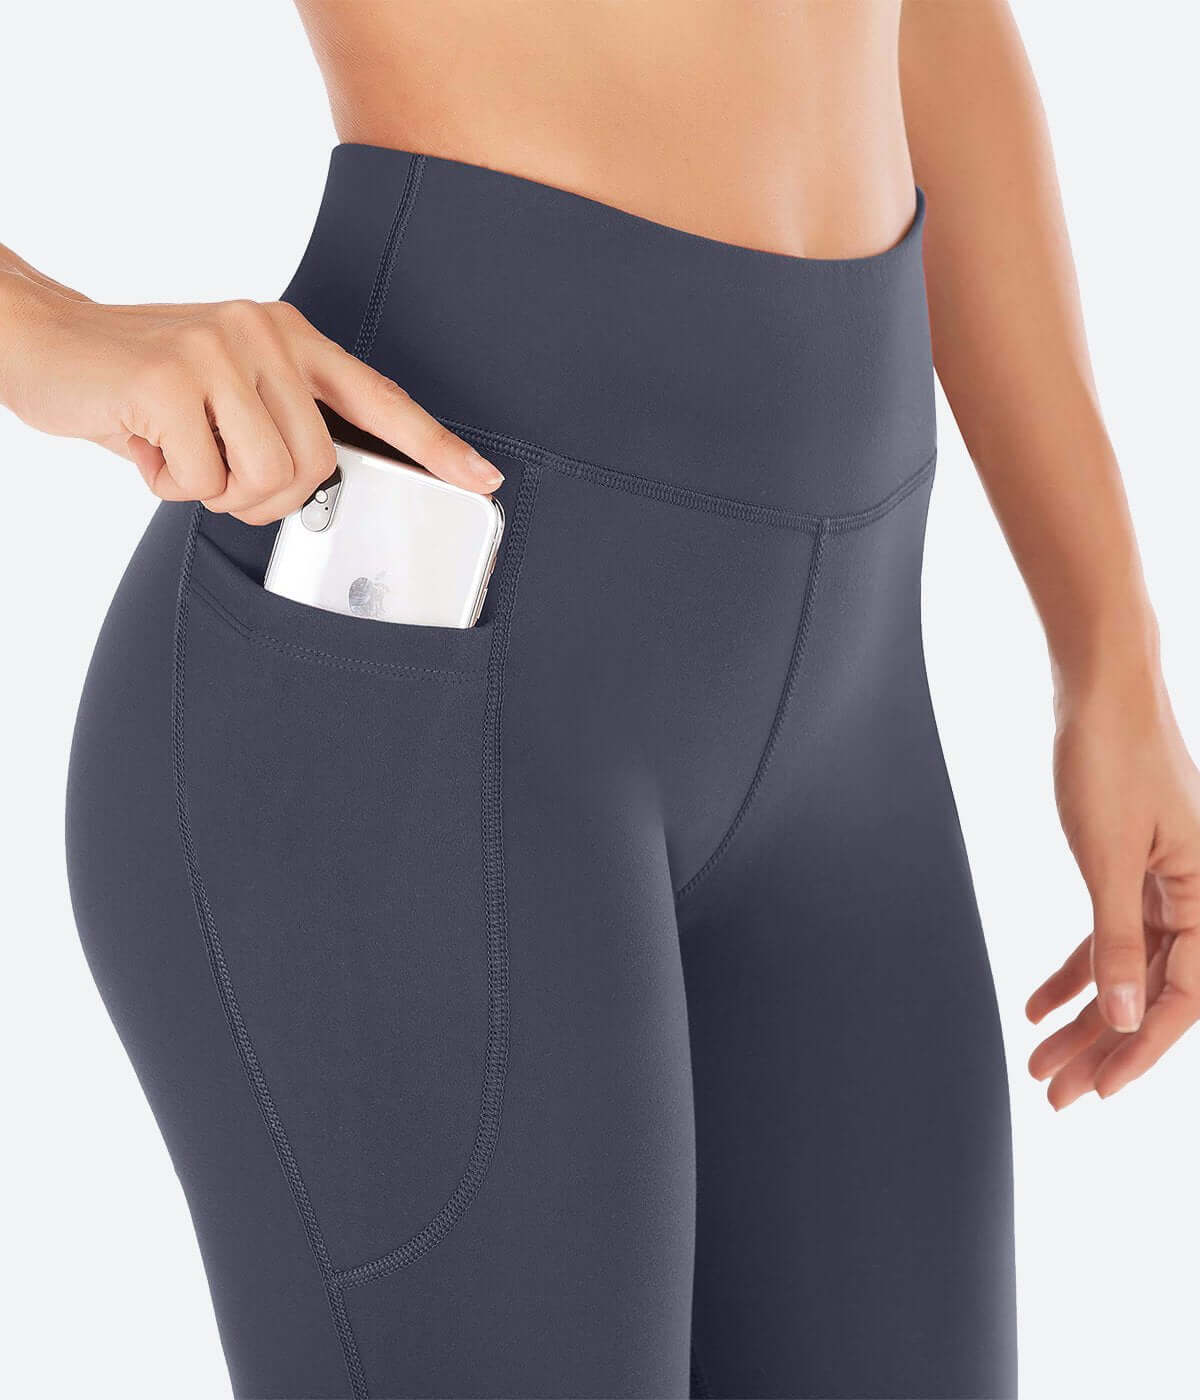  Houmous Women's Bootcut Dress Yoga Pants with Pockets